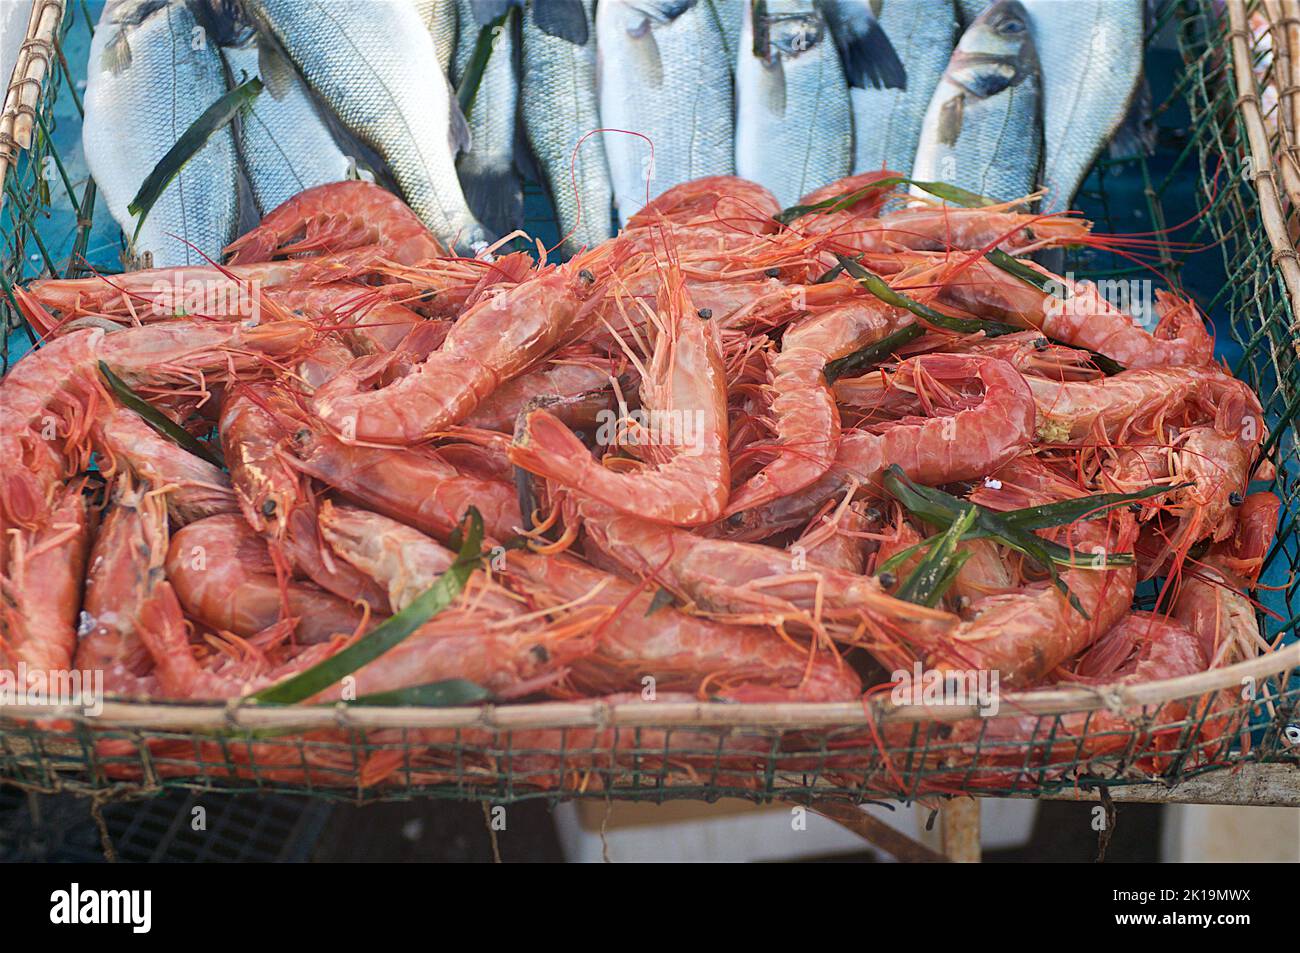 Mediterranean's Bounty: Captivating Red Tiger Prawns at the Vibrant Fish Market in Cagliari, Sardinia, Italy Stock Photo